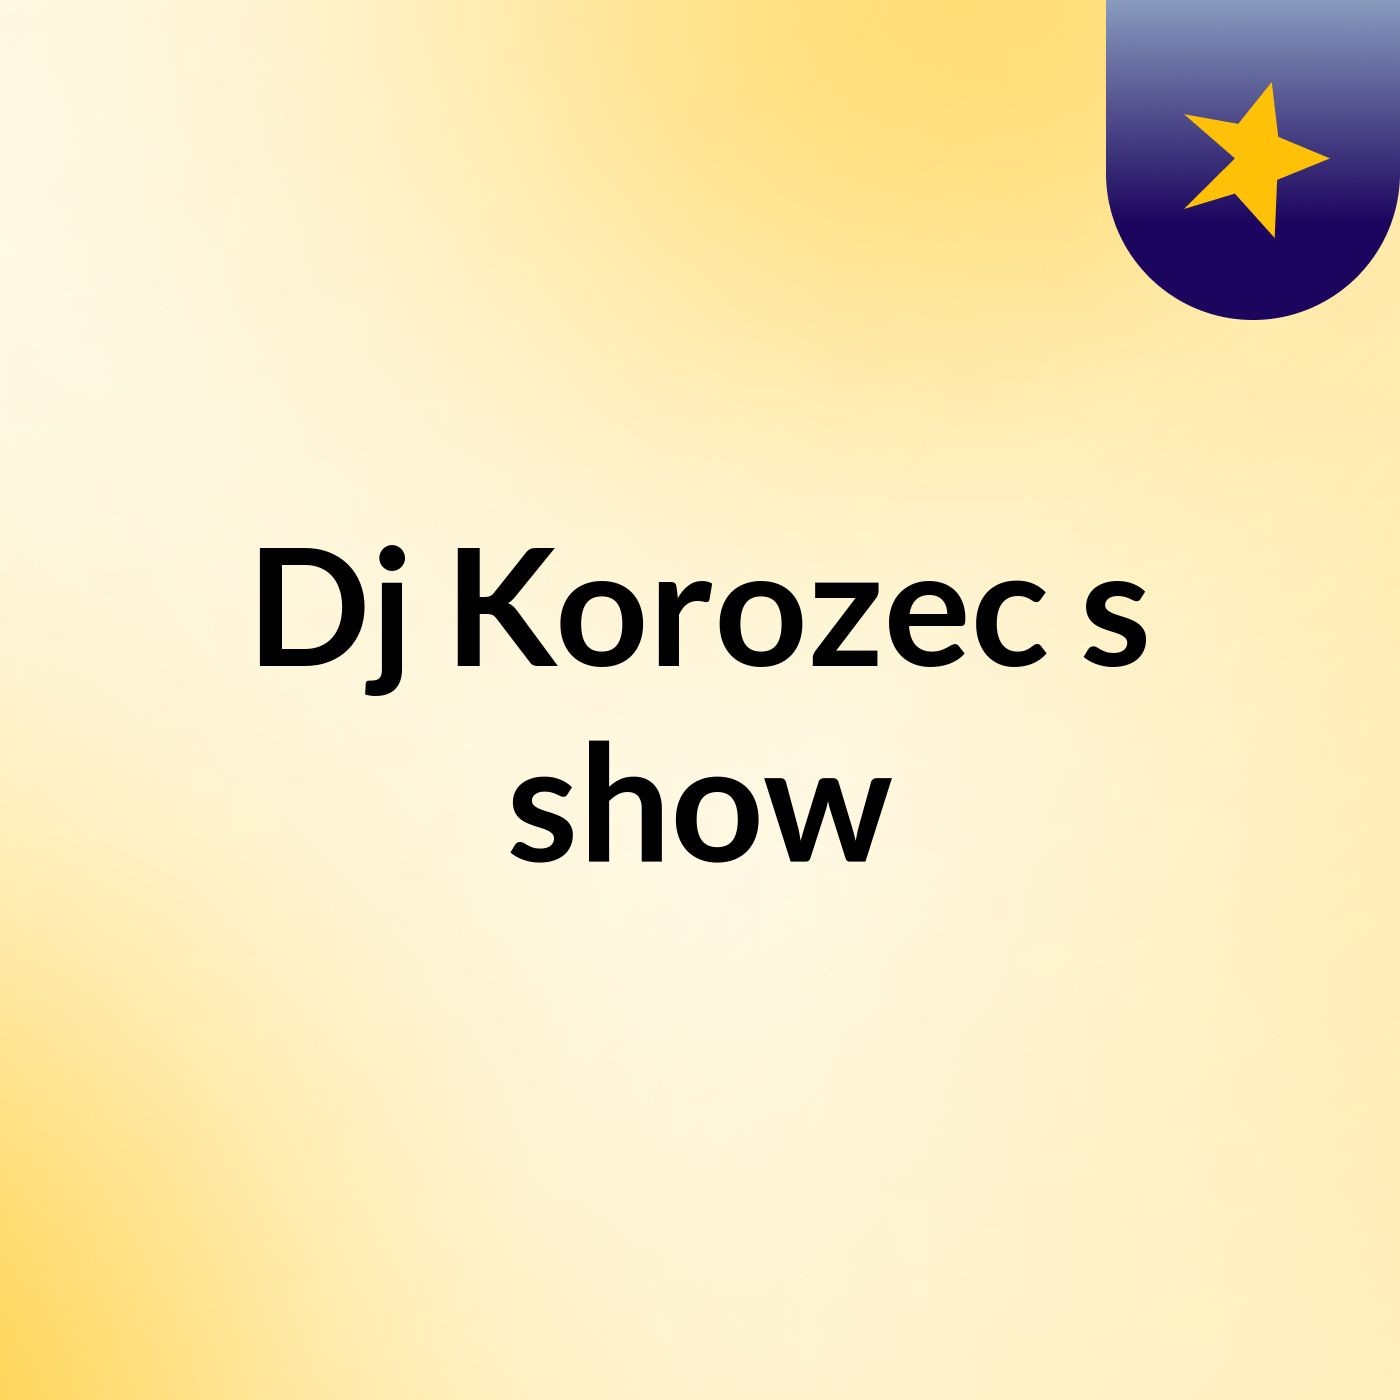 Dj Korozec's show